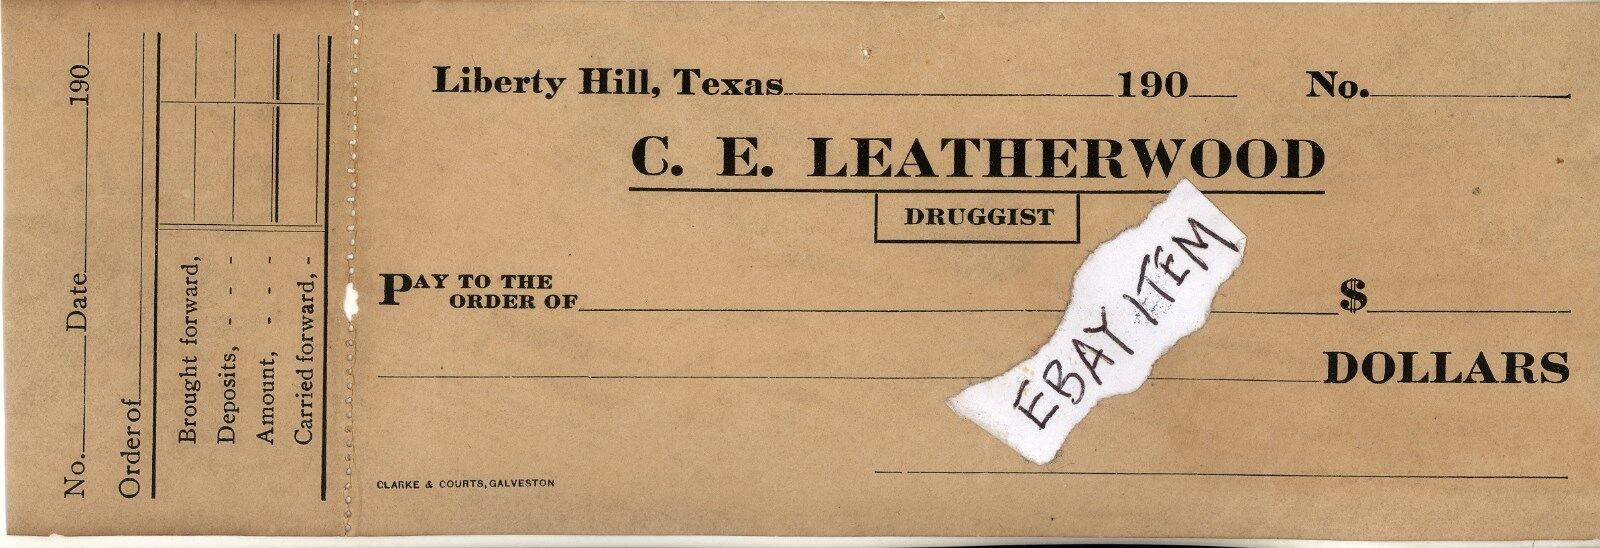 1905 Bank Check Liberty Hill Texas C. E. Leatherwood Druggist Pharmaceutical